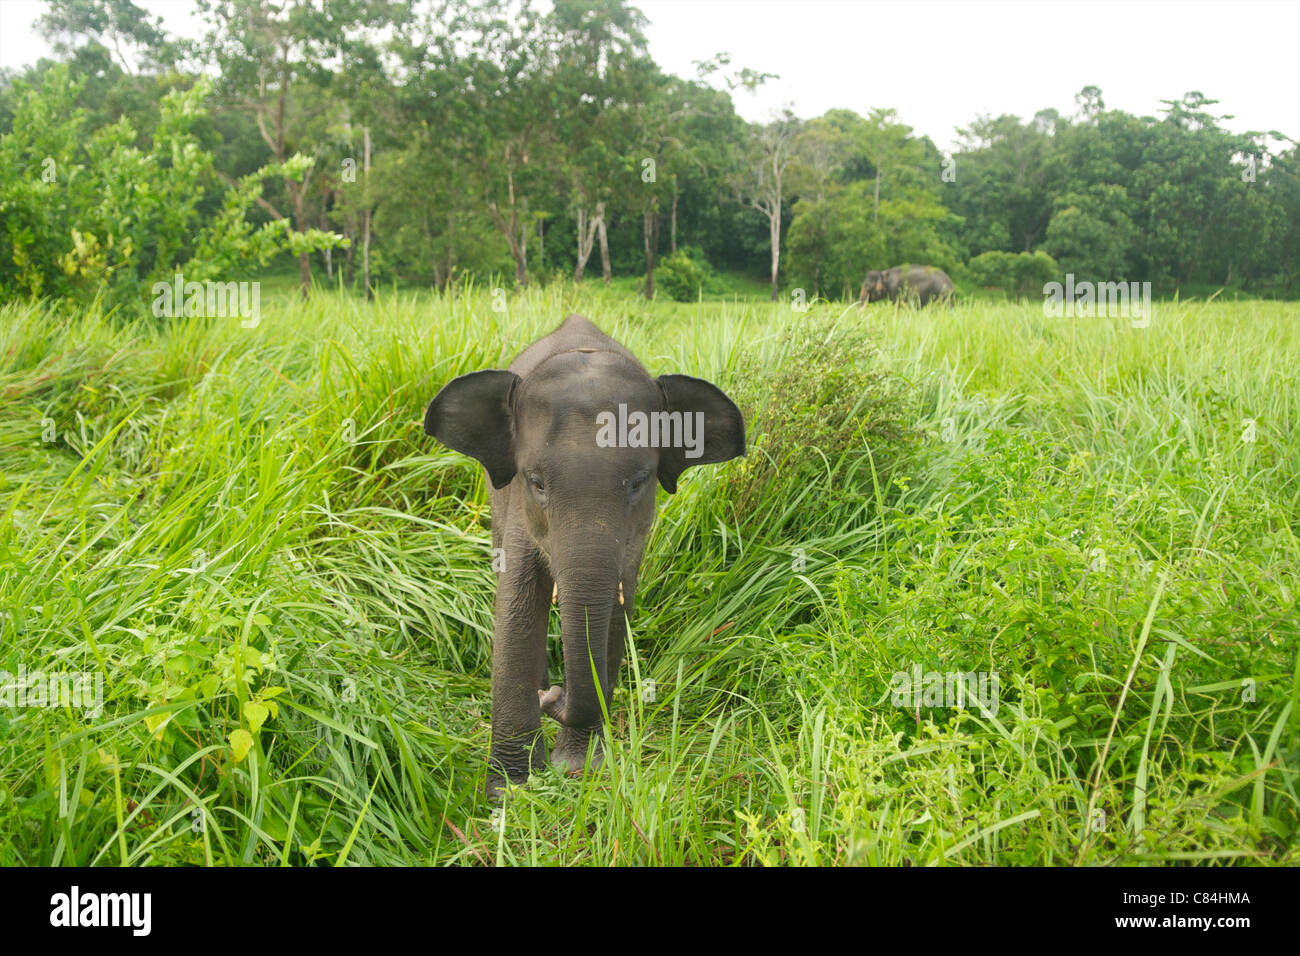 Bambino elefante asiatico, prigioniero, Gunung Leuser National Park, Indonesia. Foto Stock